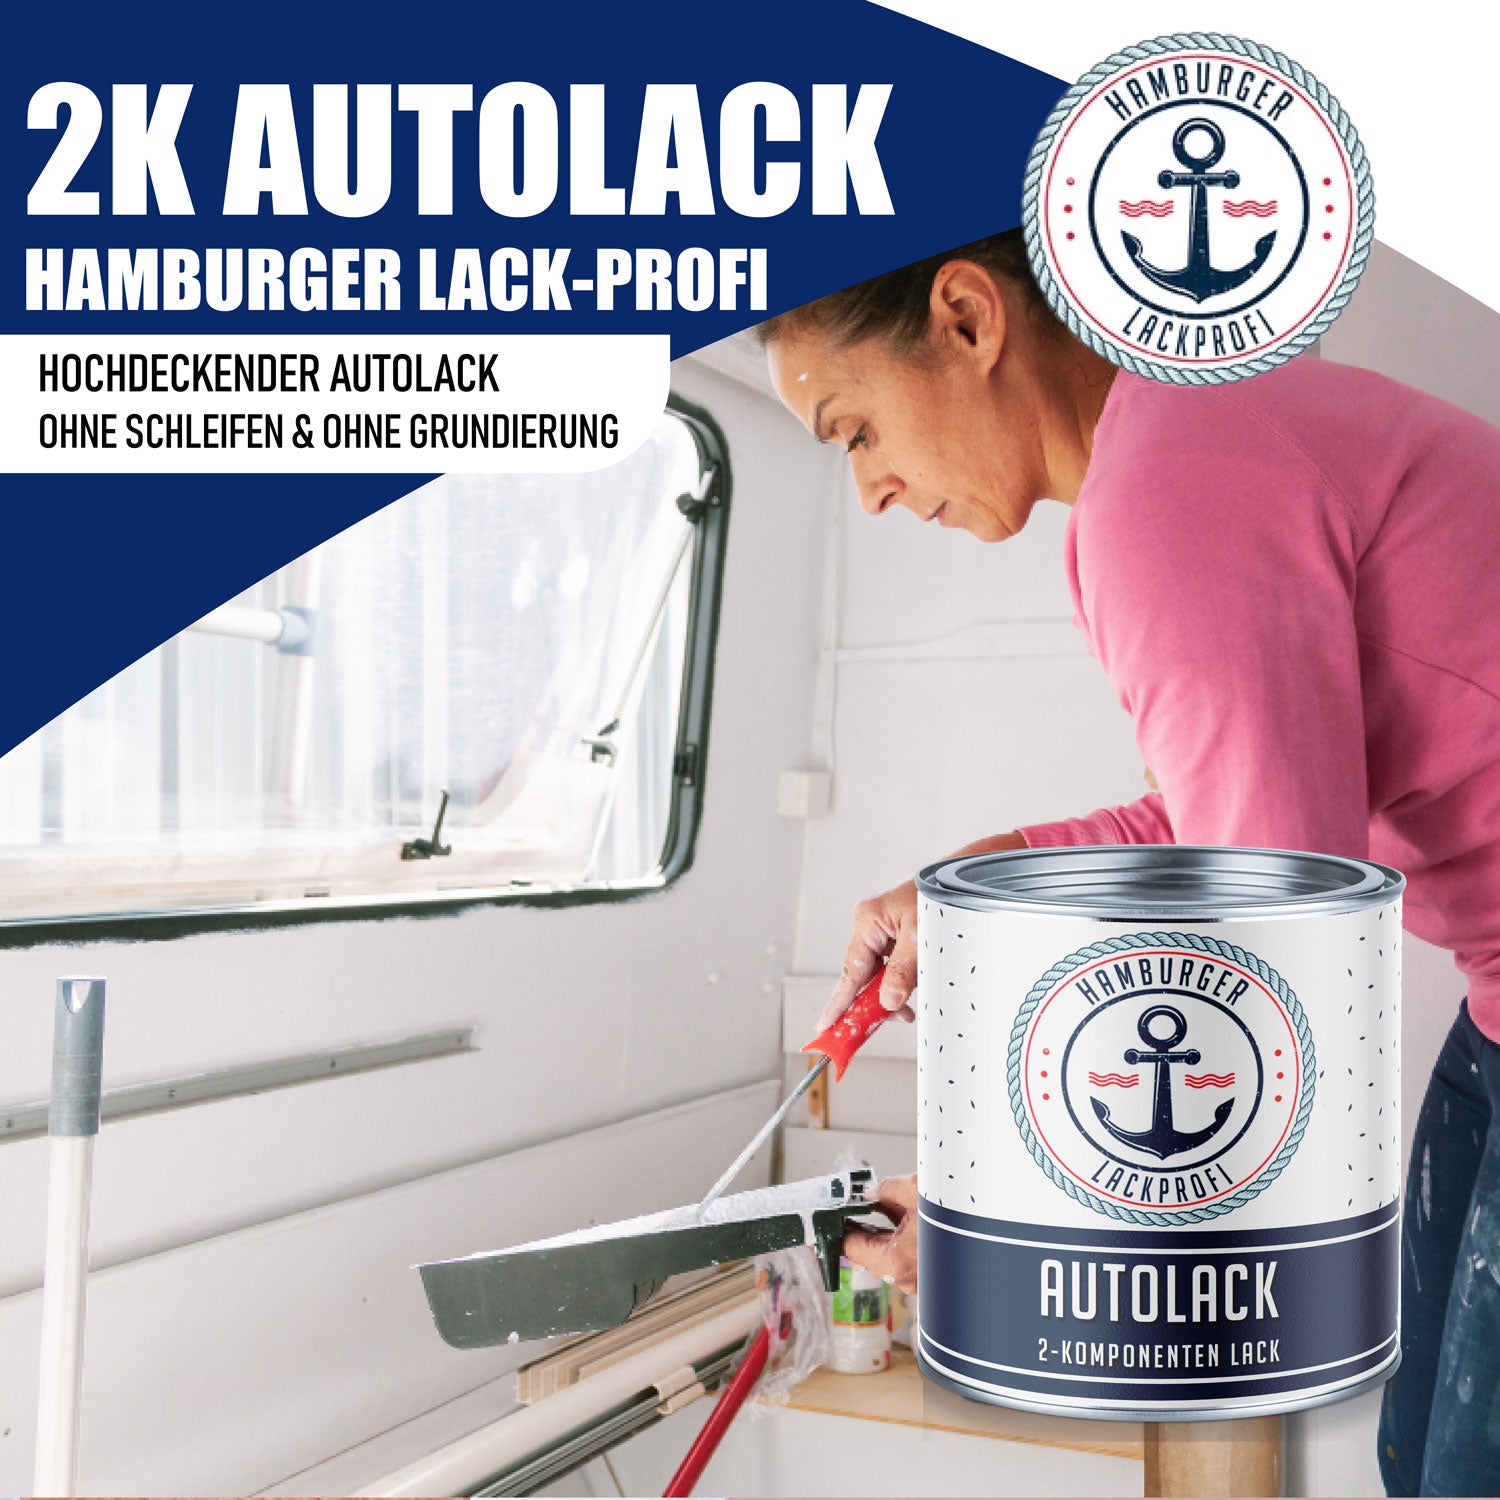 Hamburger Lack-Profi 2K Autolack in Graubeige RAL 1019 mit Lackierset (X300) & Verdünnung (1 L) - 30% Sparangebot